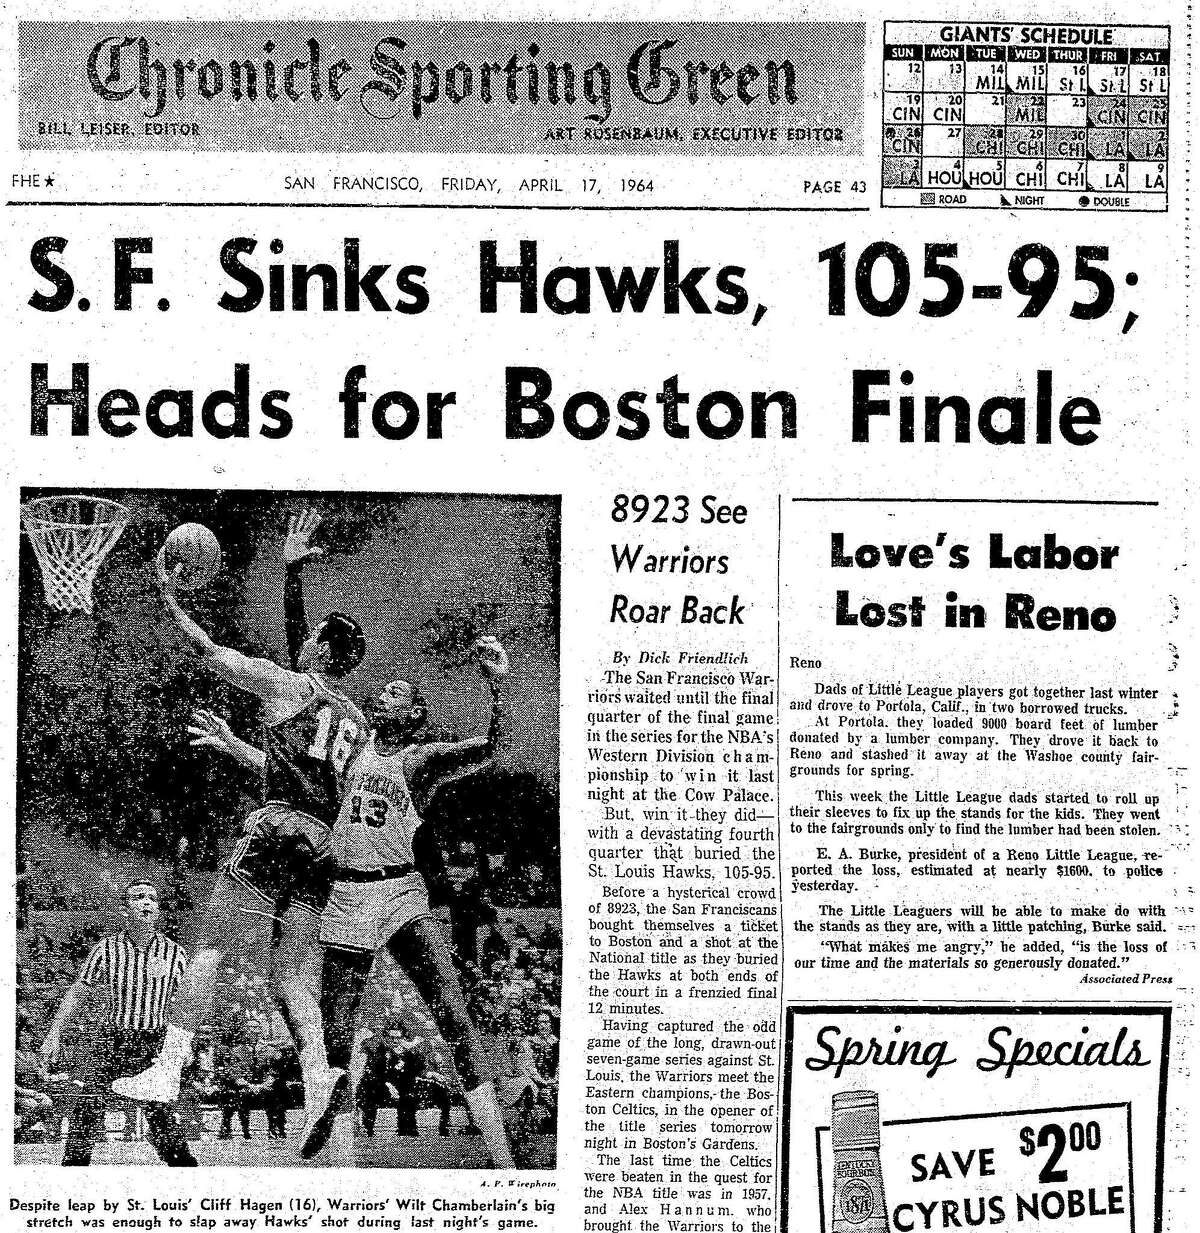 April 16, 1964: SF Warriors beat St. Louis Hawks to reach NBA Finals